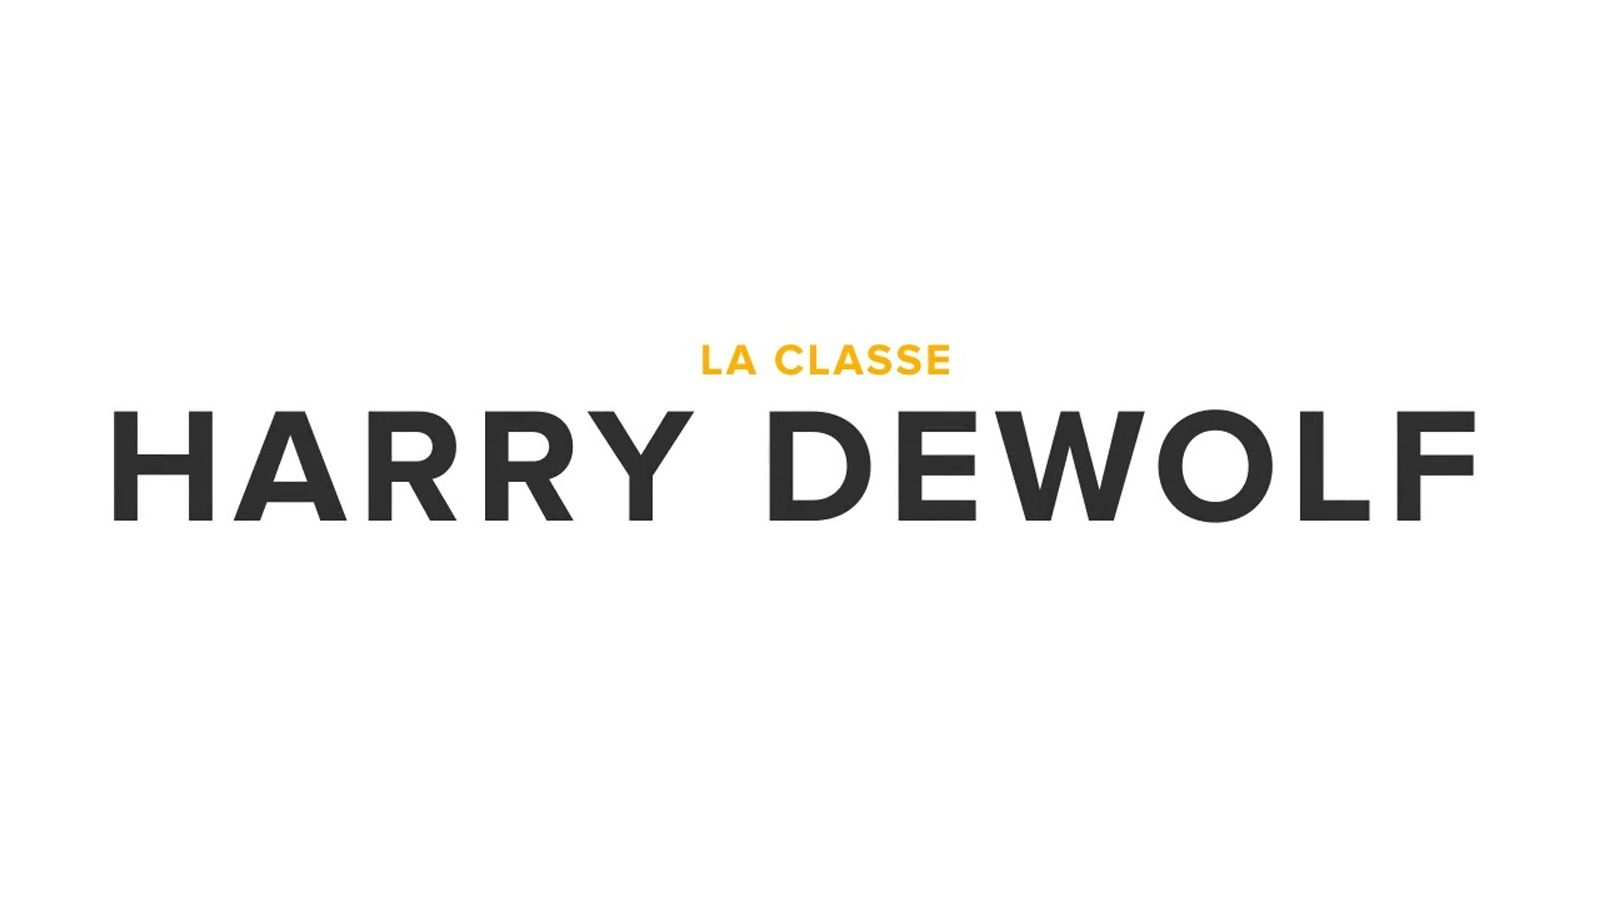 Diapositive - La classe Harry DeWolf